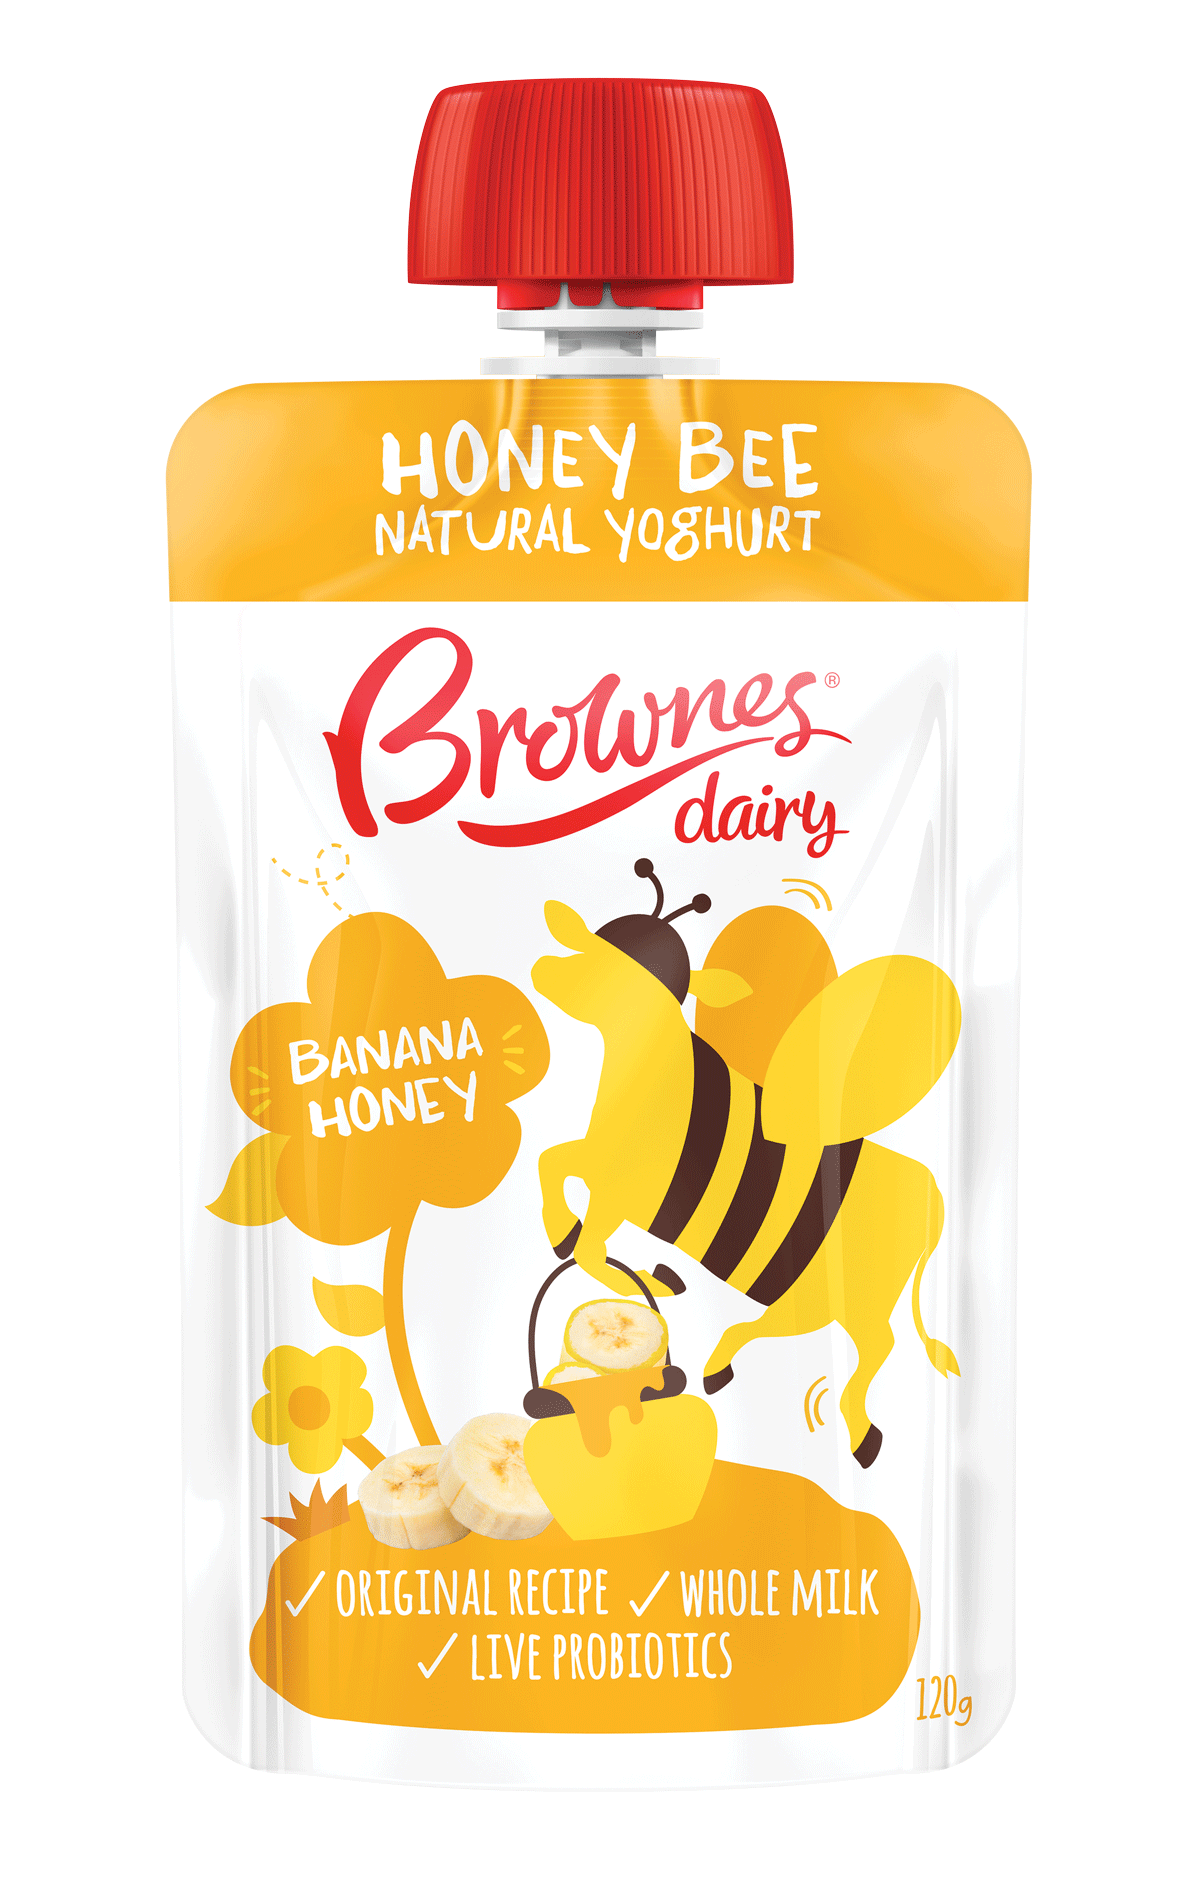 Honey Bee Natural Yoghurt